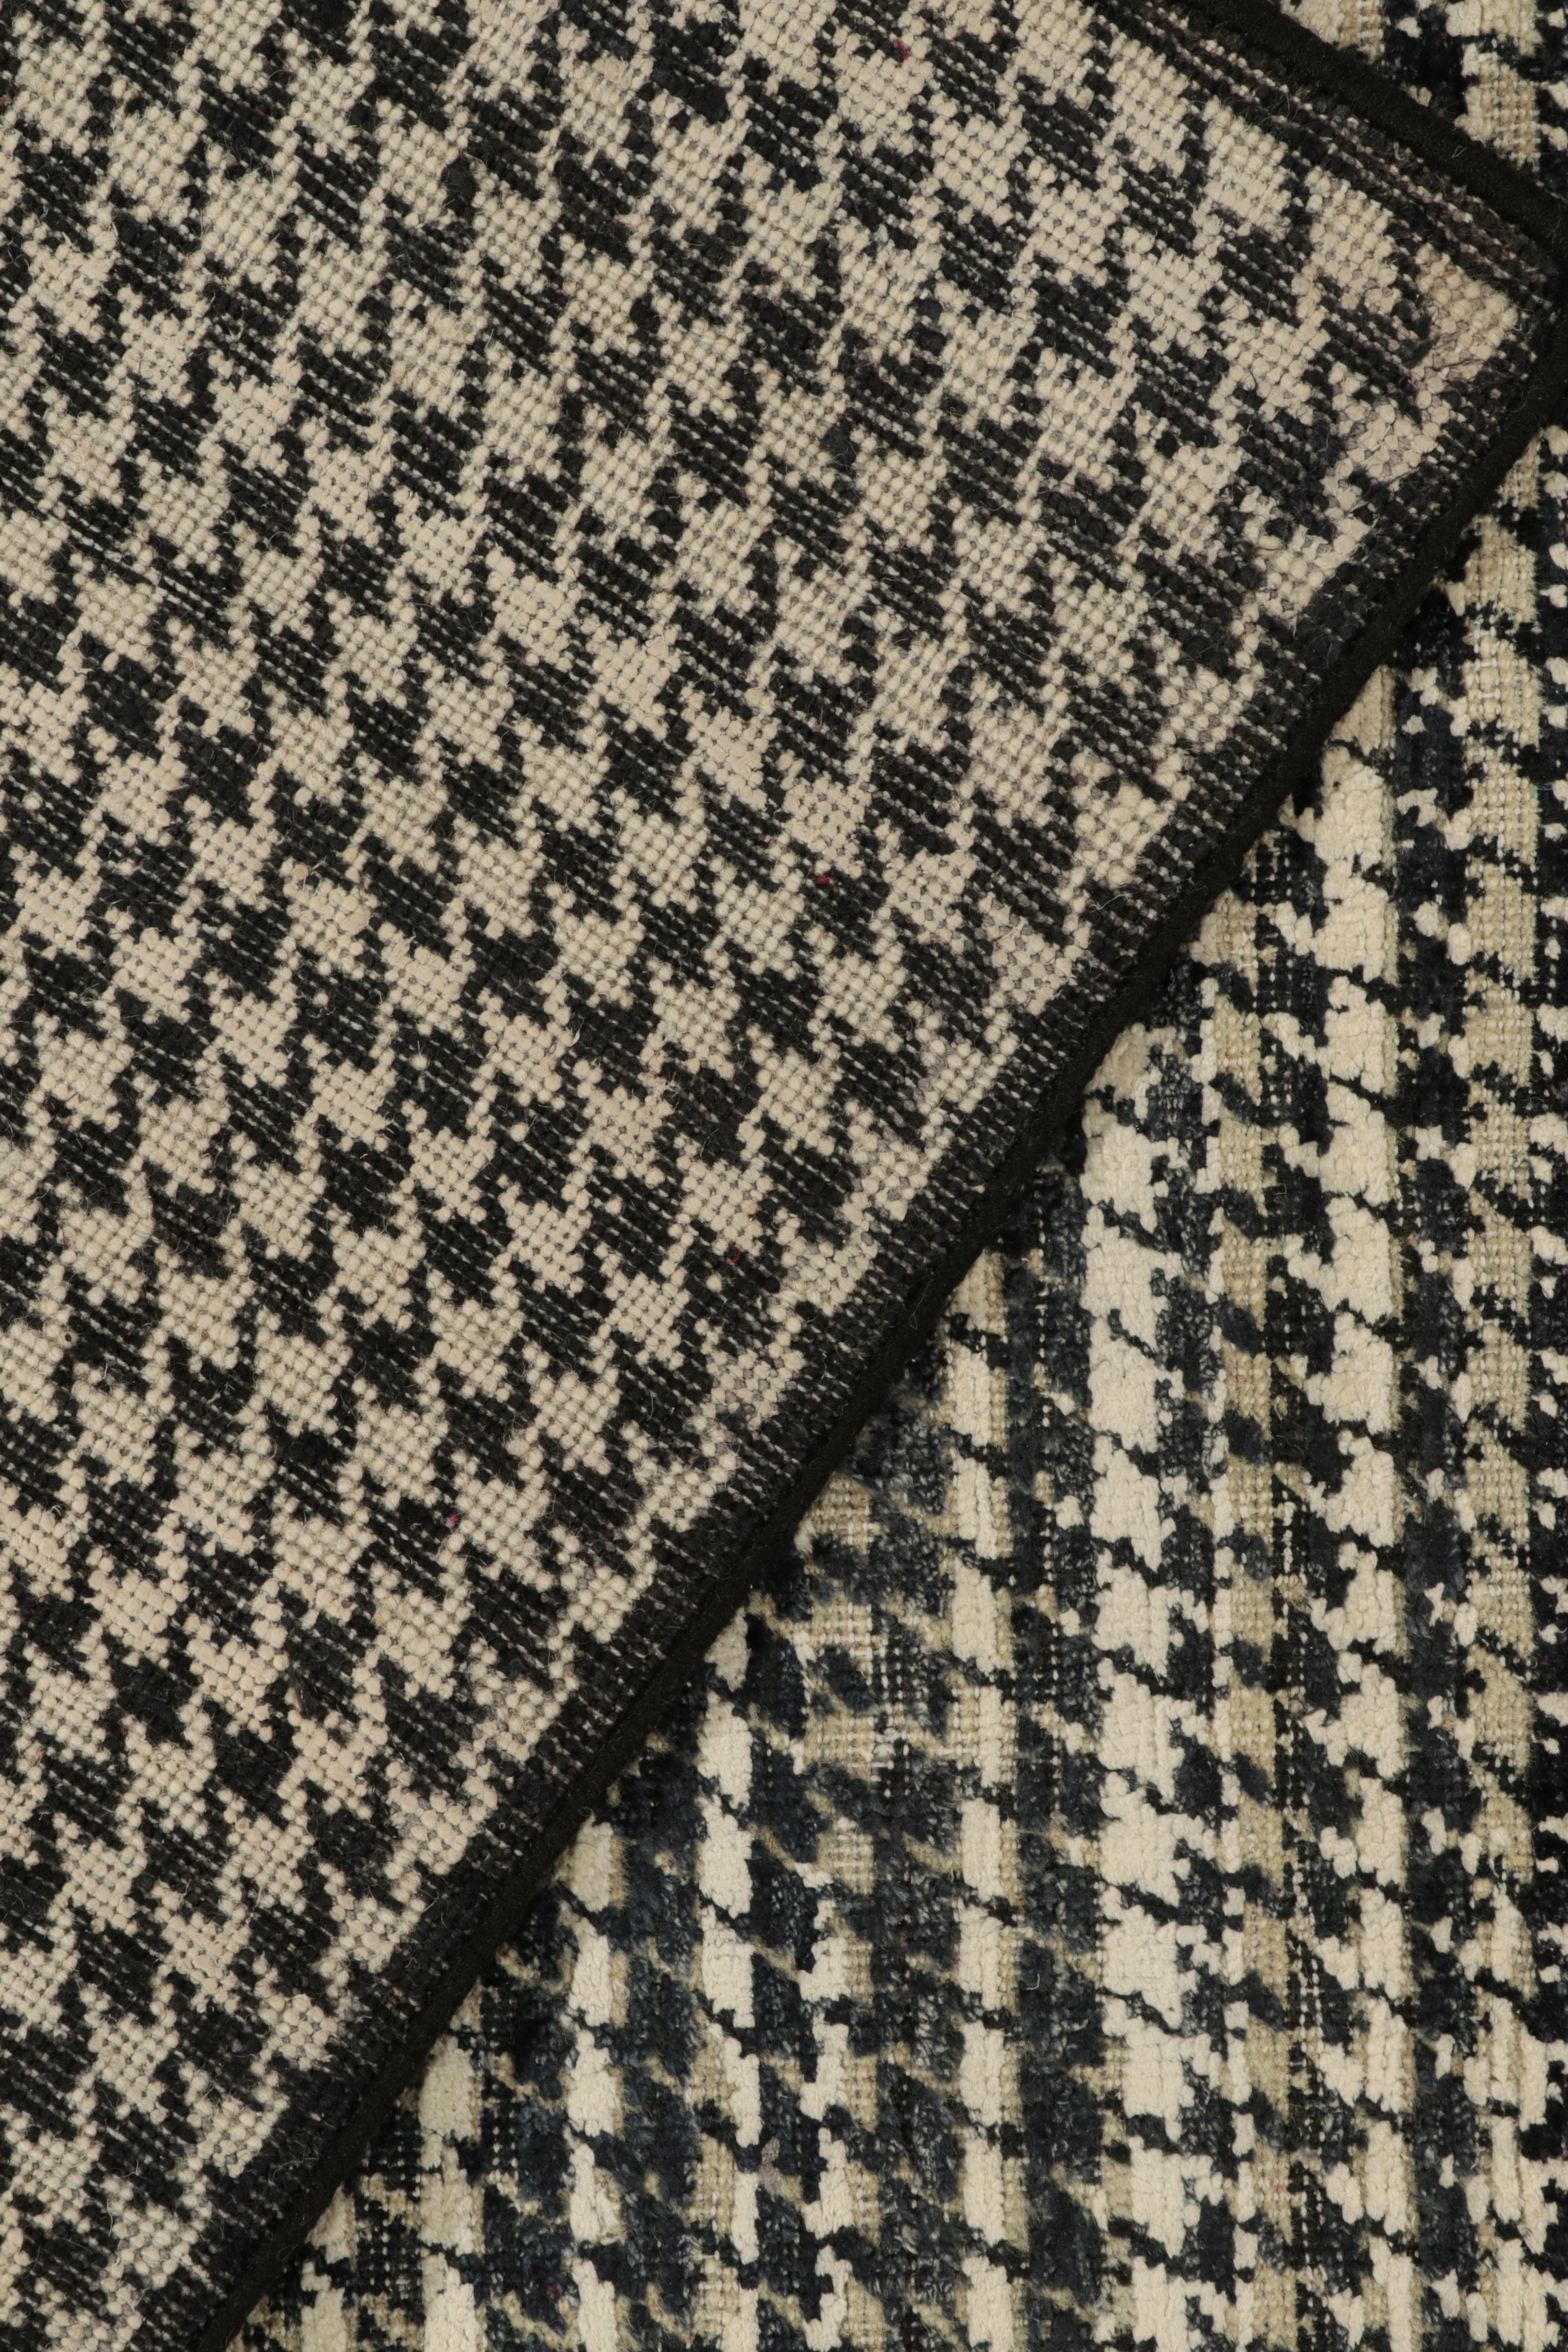 Wool Rug & Kilim’s Contemporary Runner in Black, White & Beige Geometric Pattern For Sale